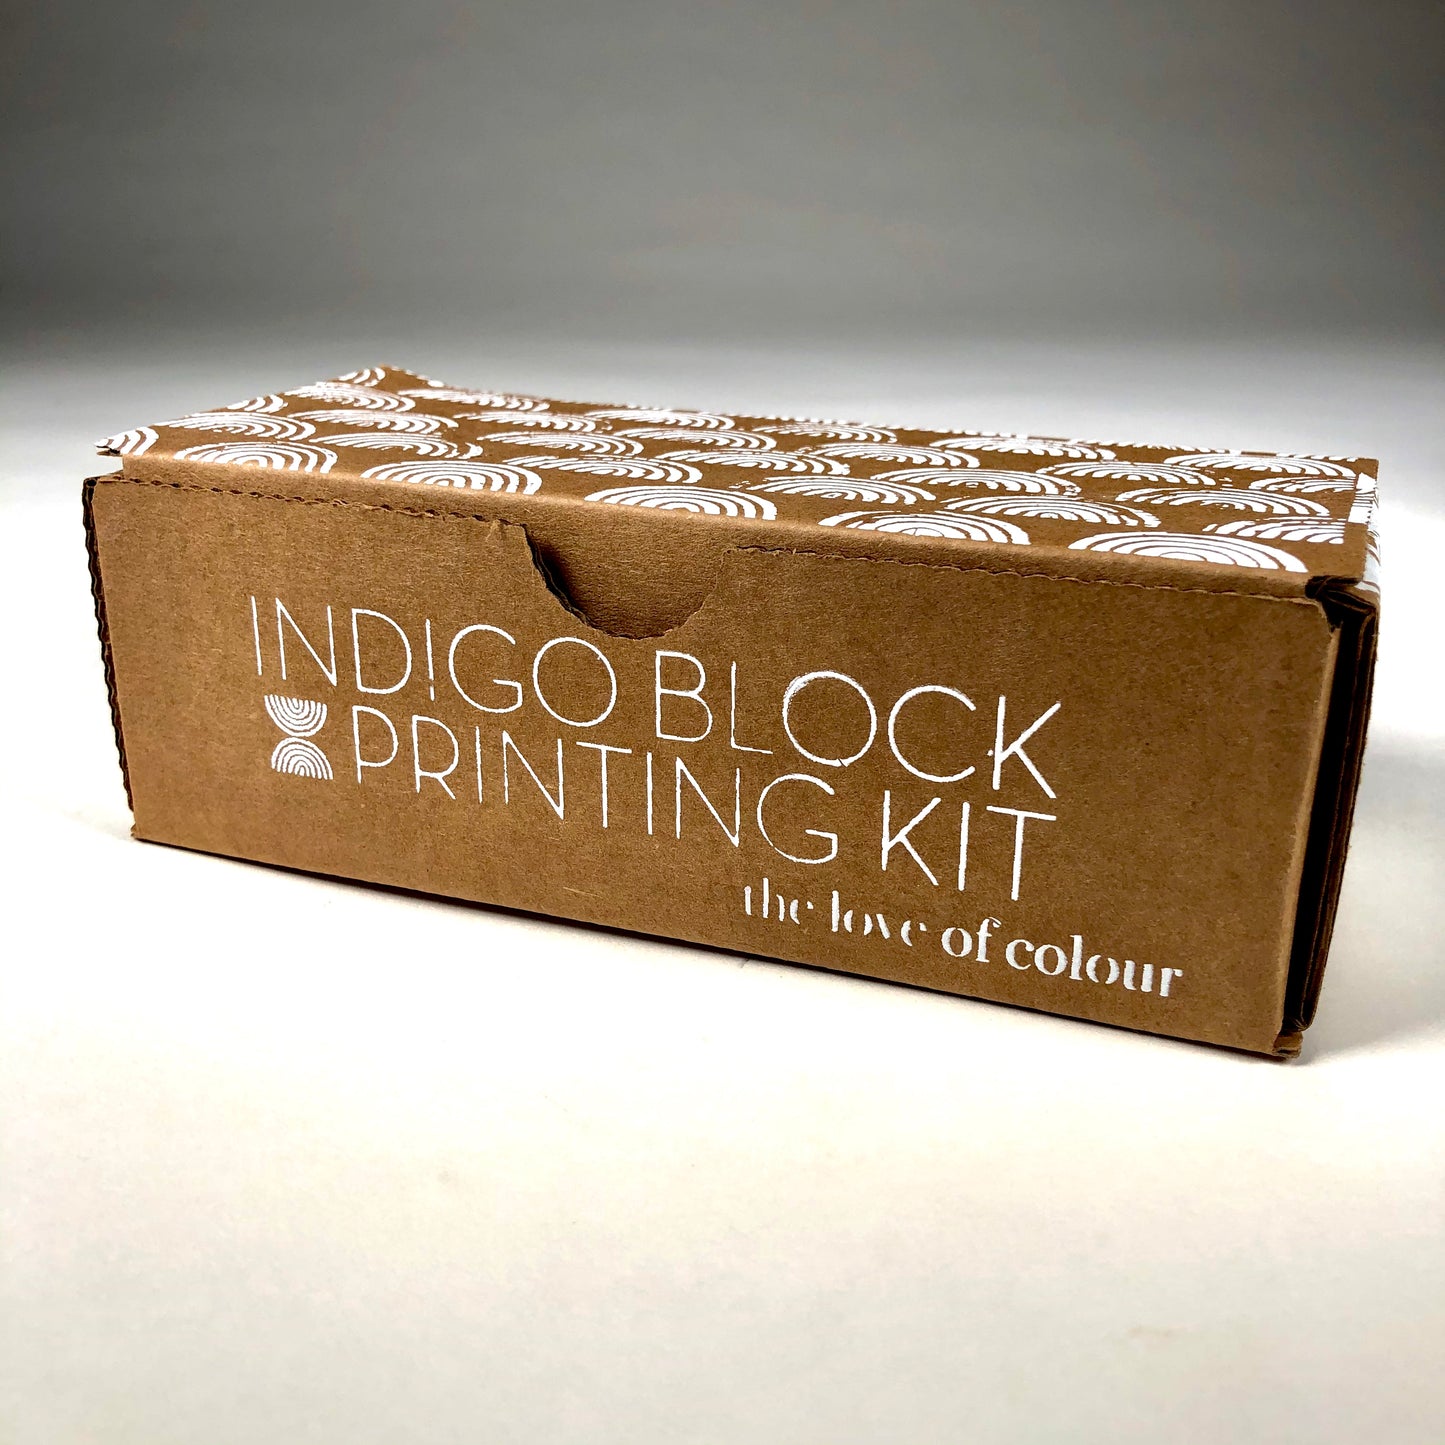 Indigo Block Printing Kit